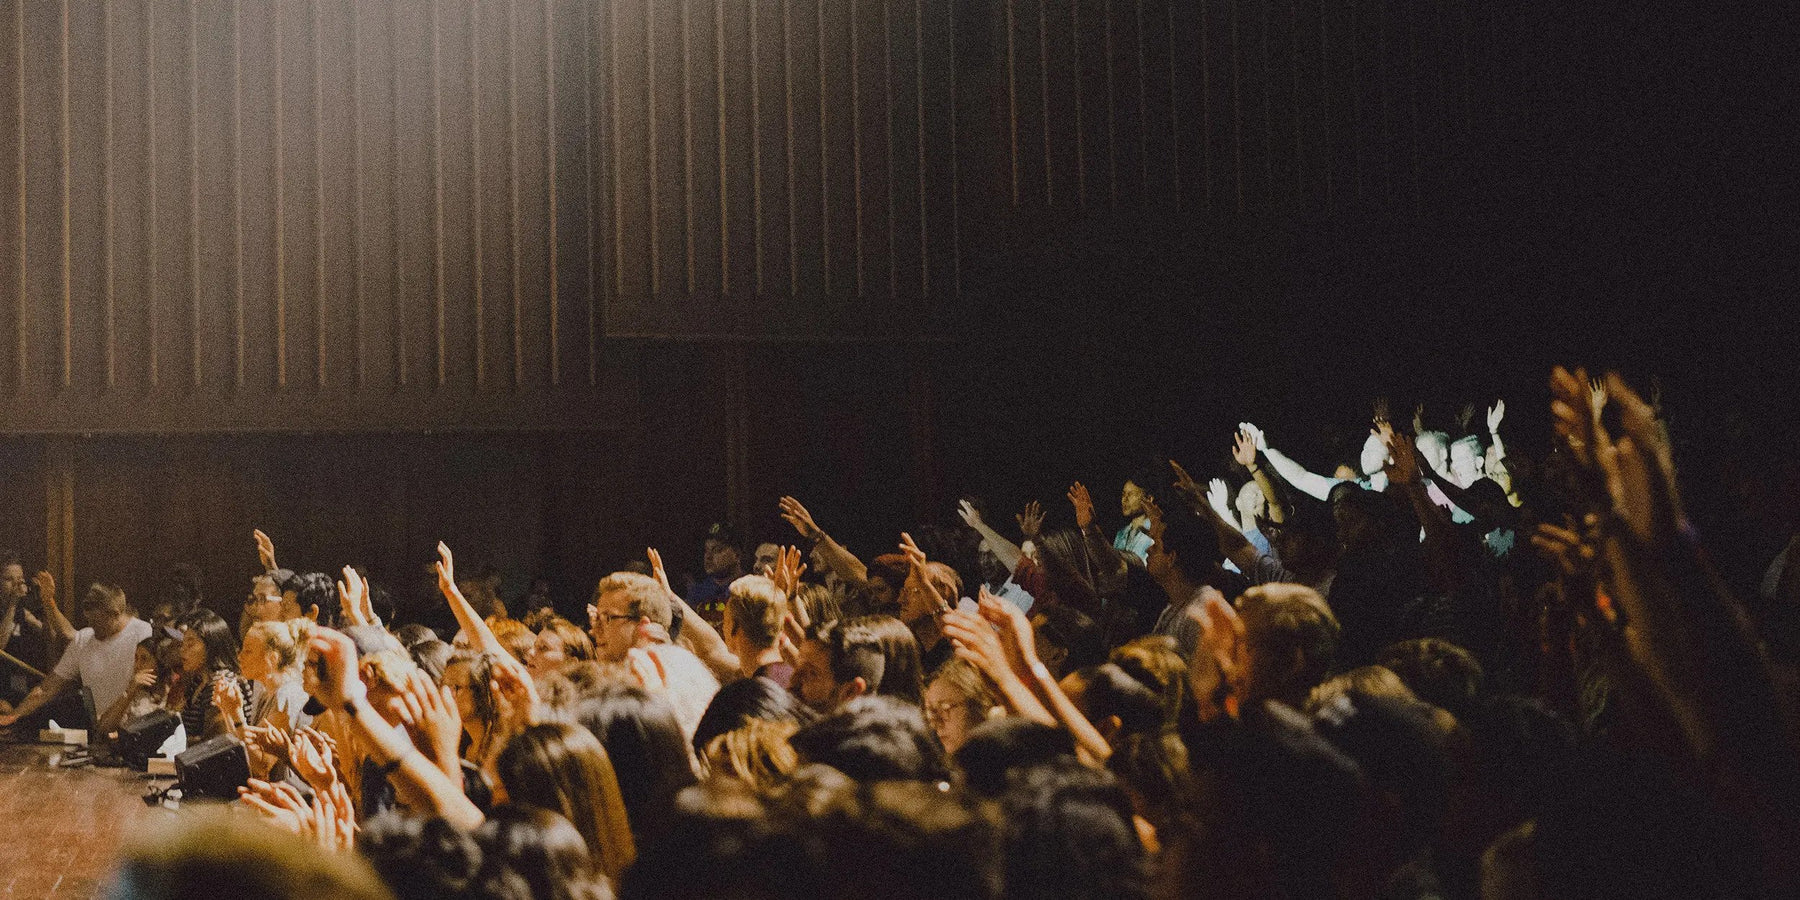 An auditorium full of people raising their hands to speak